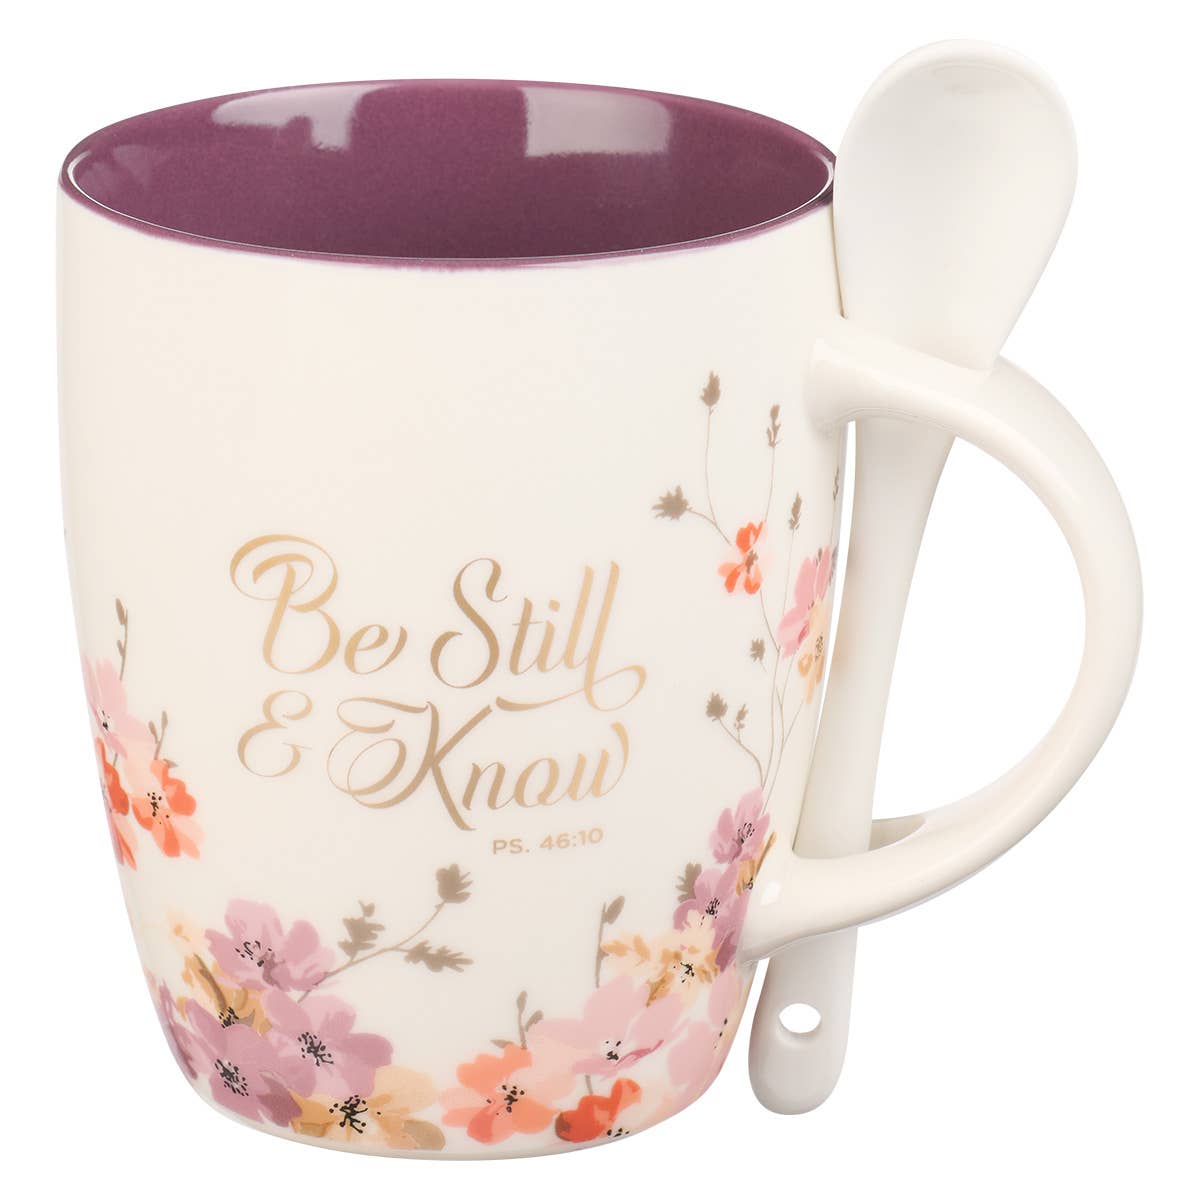 Mug - Be Still & Know Ps. 46:10 w/ Spoon